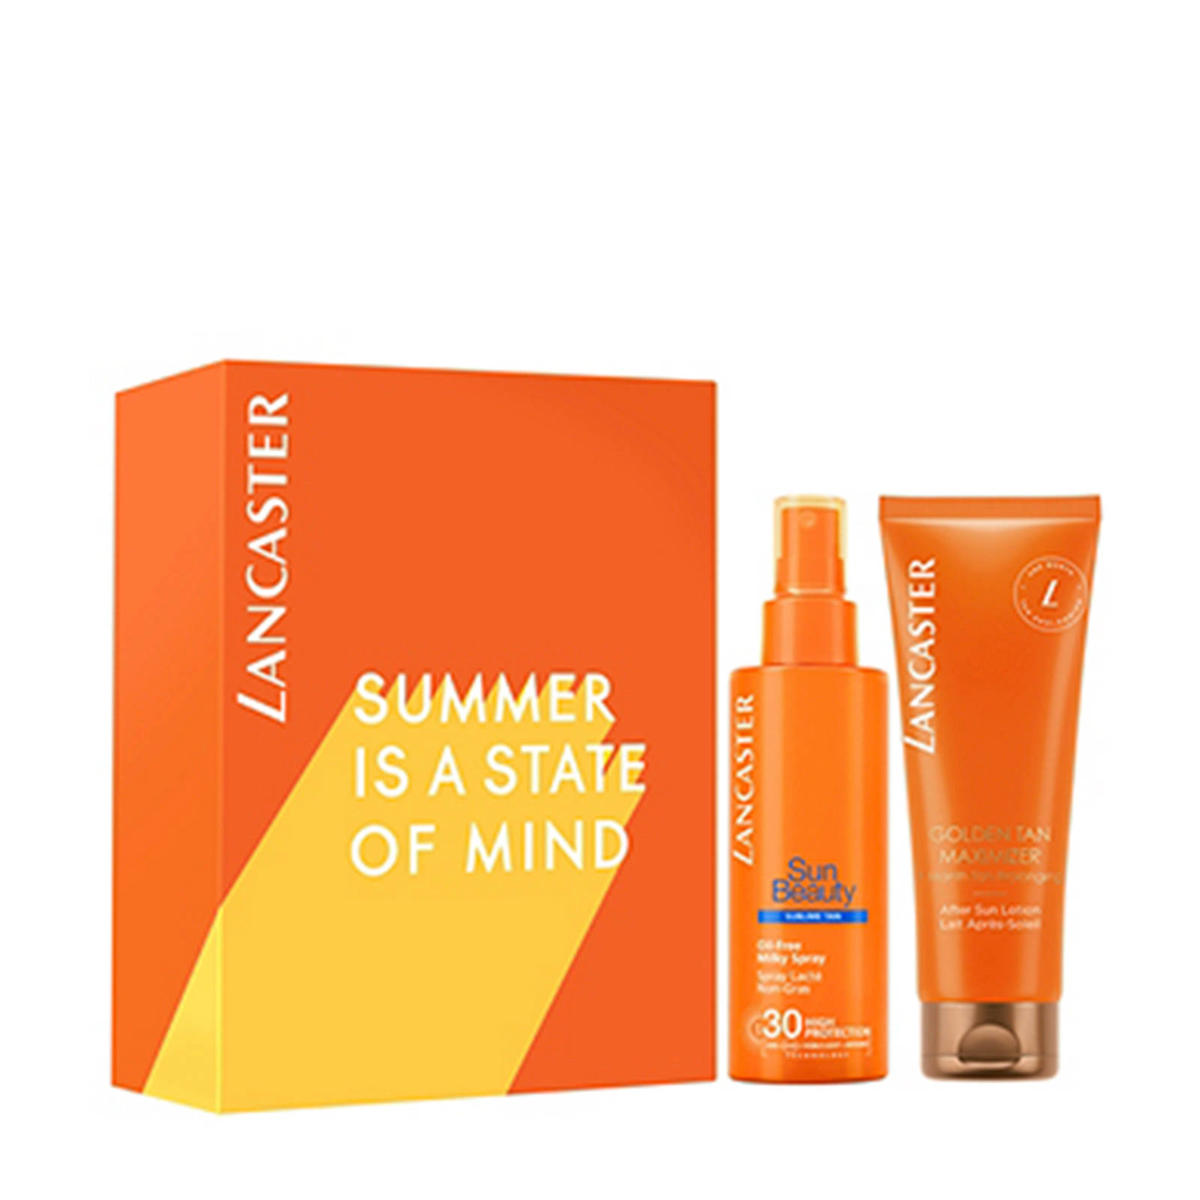 Lancaster geschenkset Sun Beauty care oil free milky spray SPF30 - 150ml golden tan maximzer after sun lotion - 125ml | wehkamp